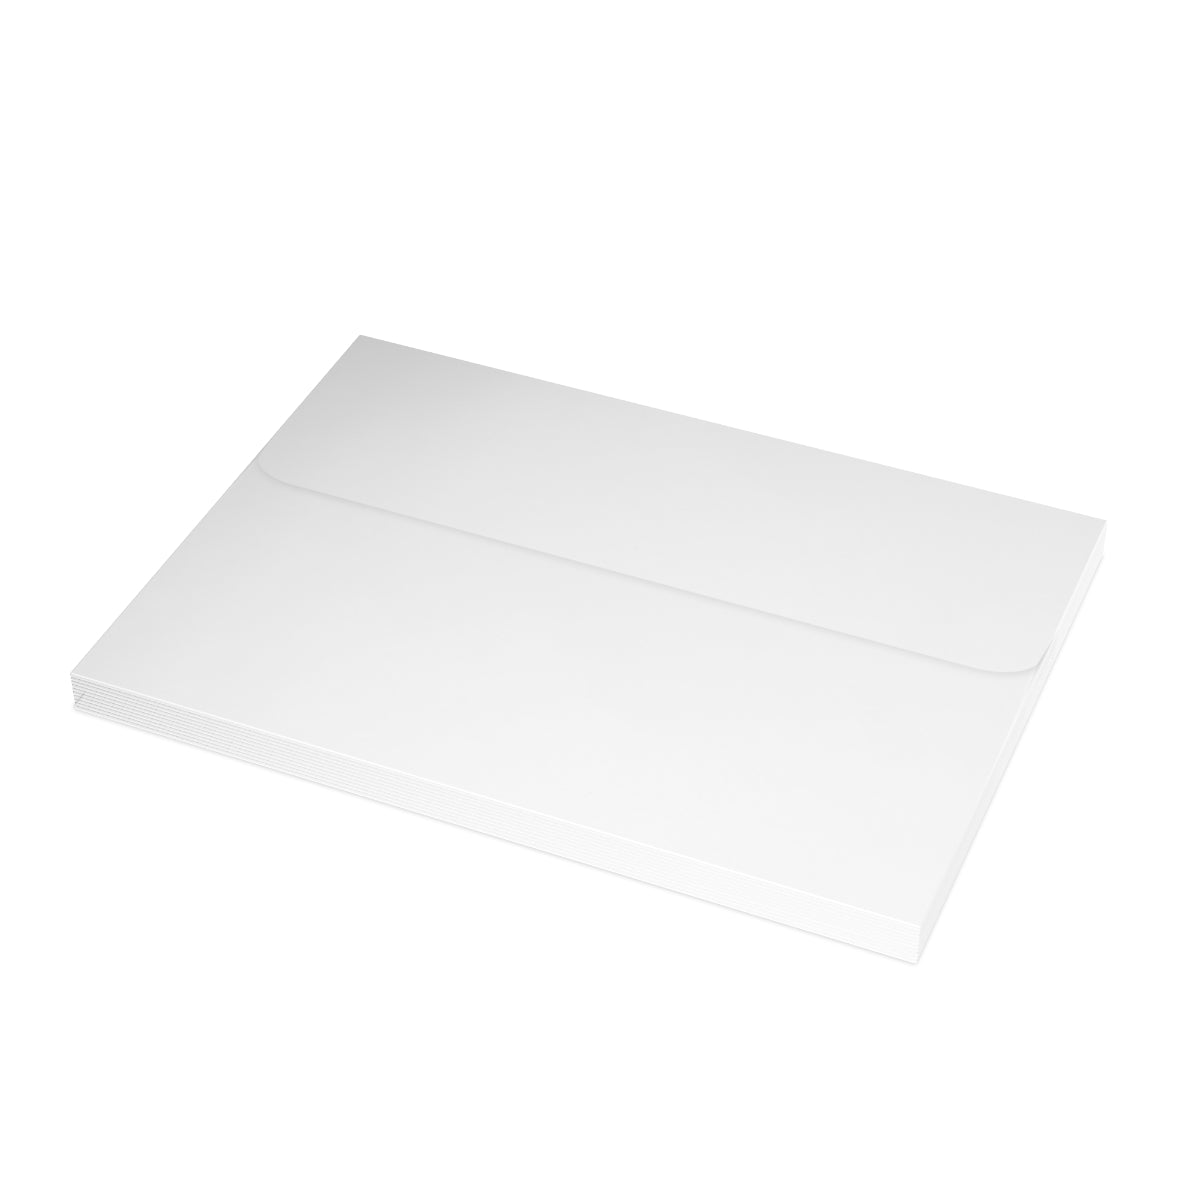 Le Luberon Folded Matte Notecards + Envelopes (10pcs)